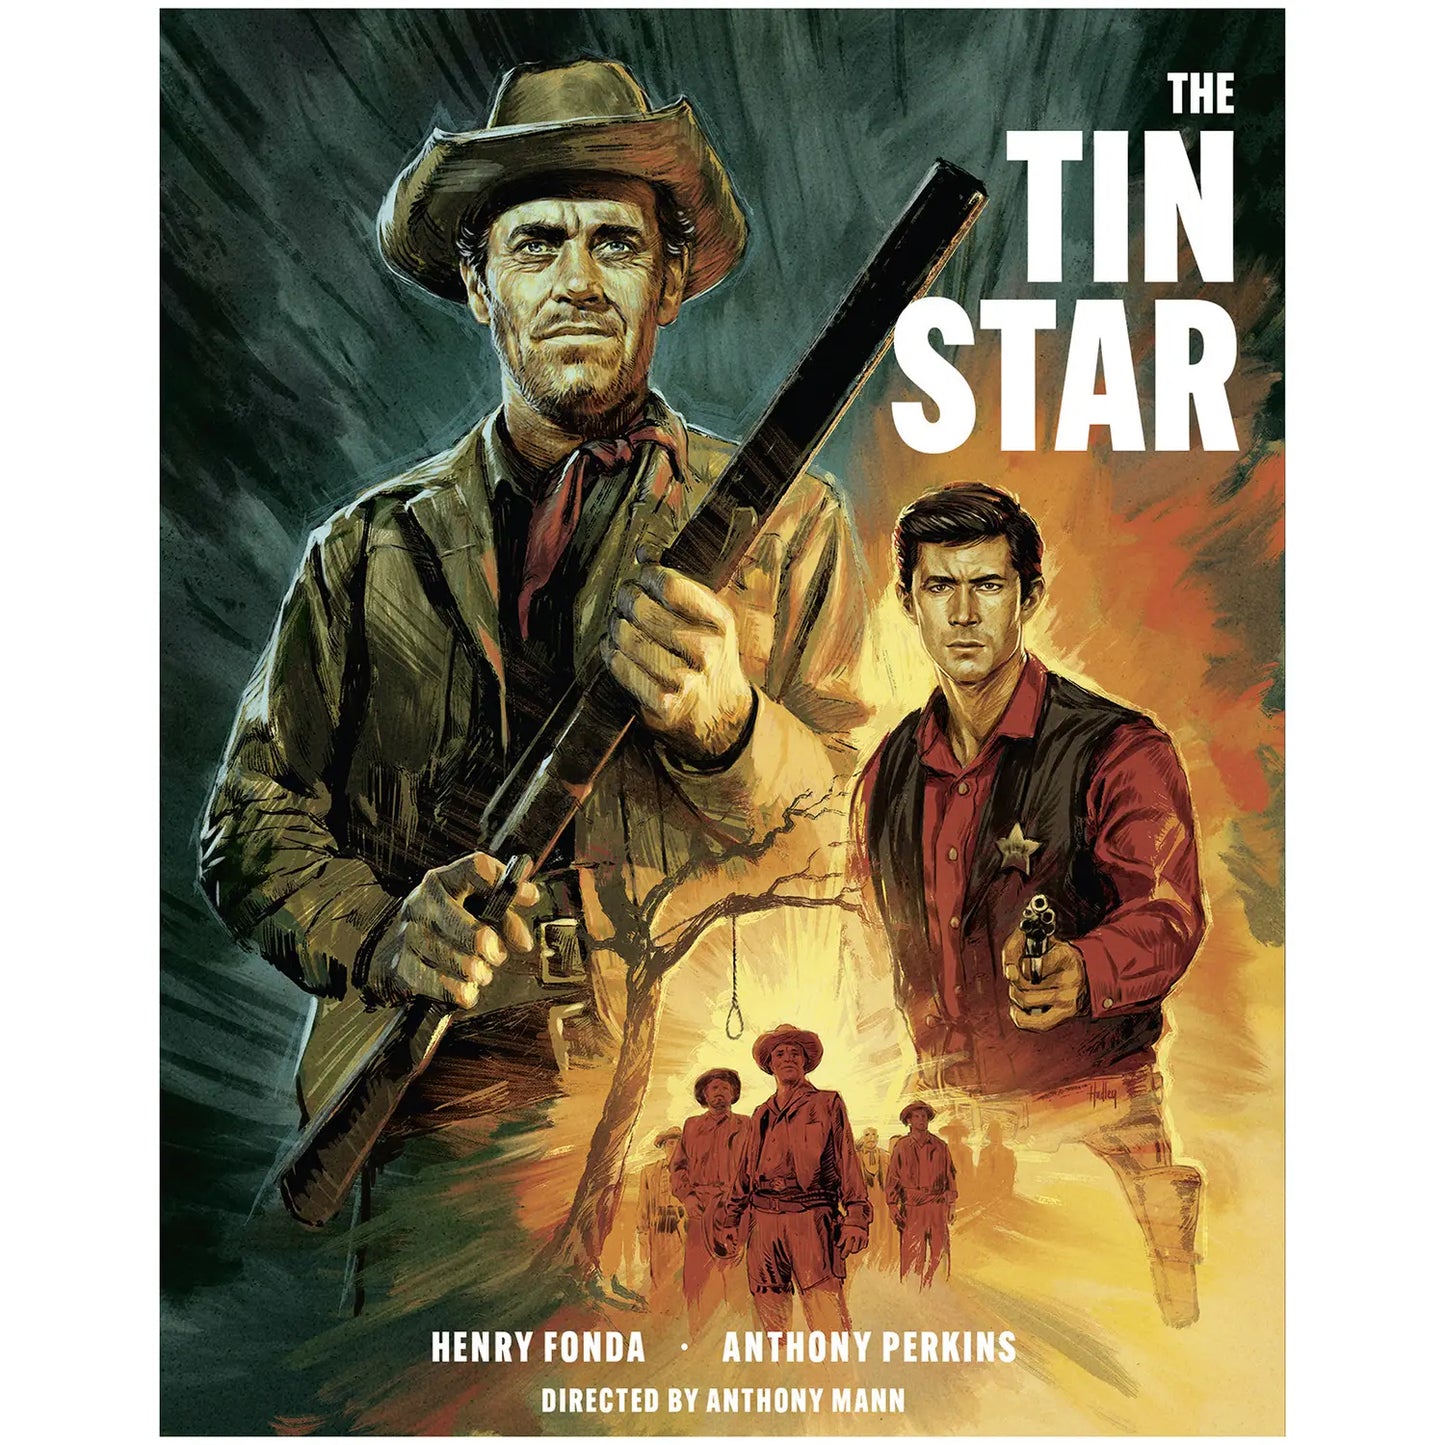 Tin Star Limited Edition Blu-ray with Slipcover (Arrow U.S.)